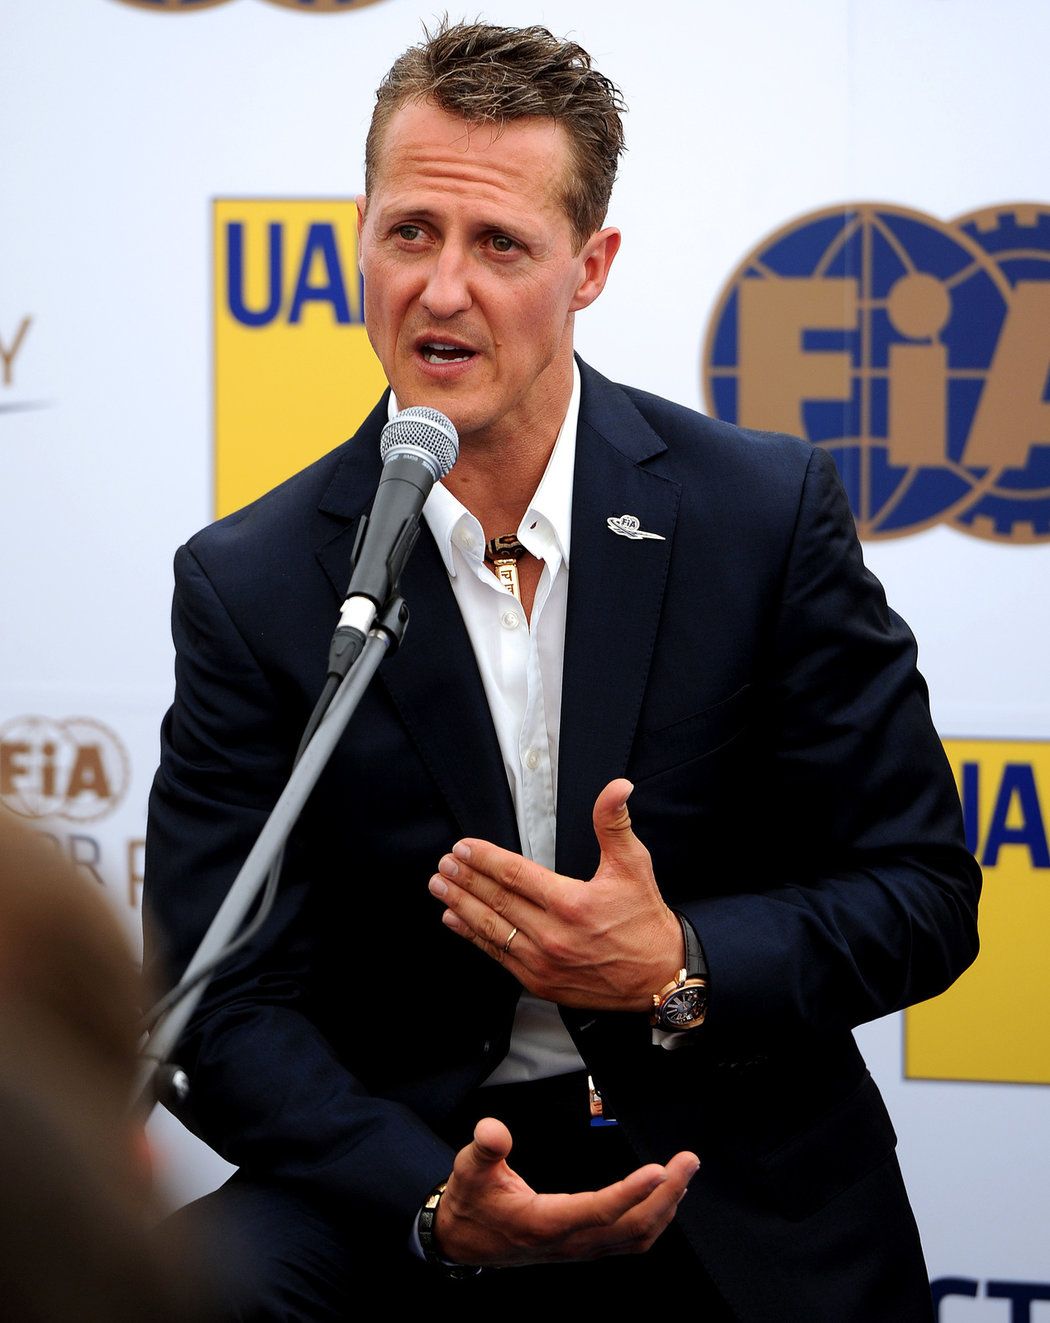 Michael Schumacher v roce 2012